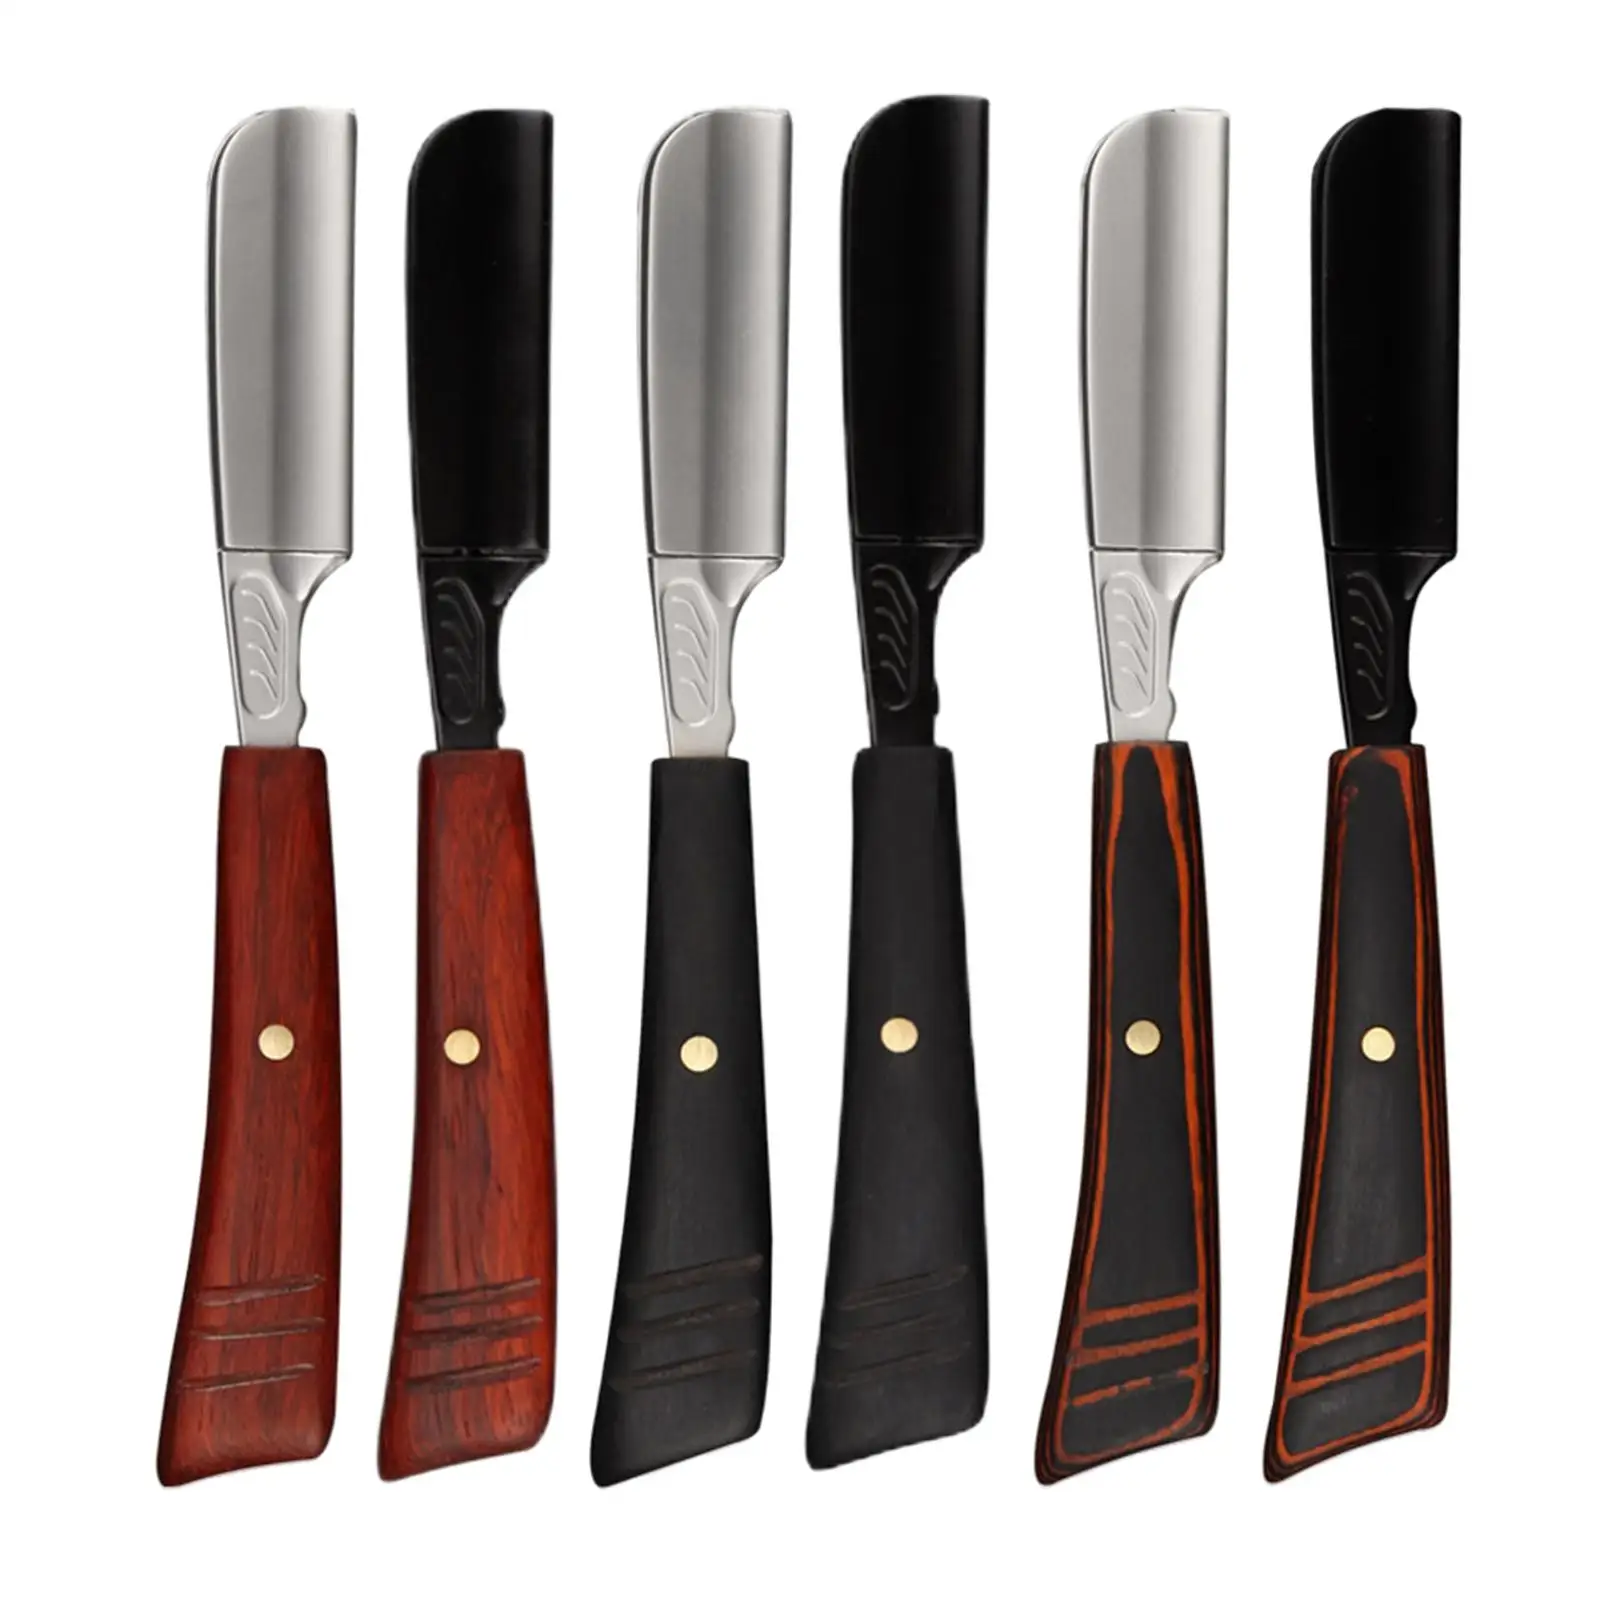 Razor Straight Handle Stylist Blades Holder Use Japanese Style Blades Easy Installation